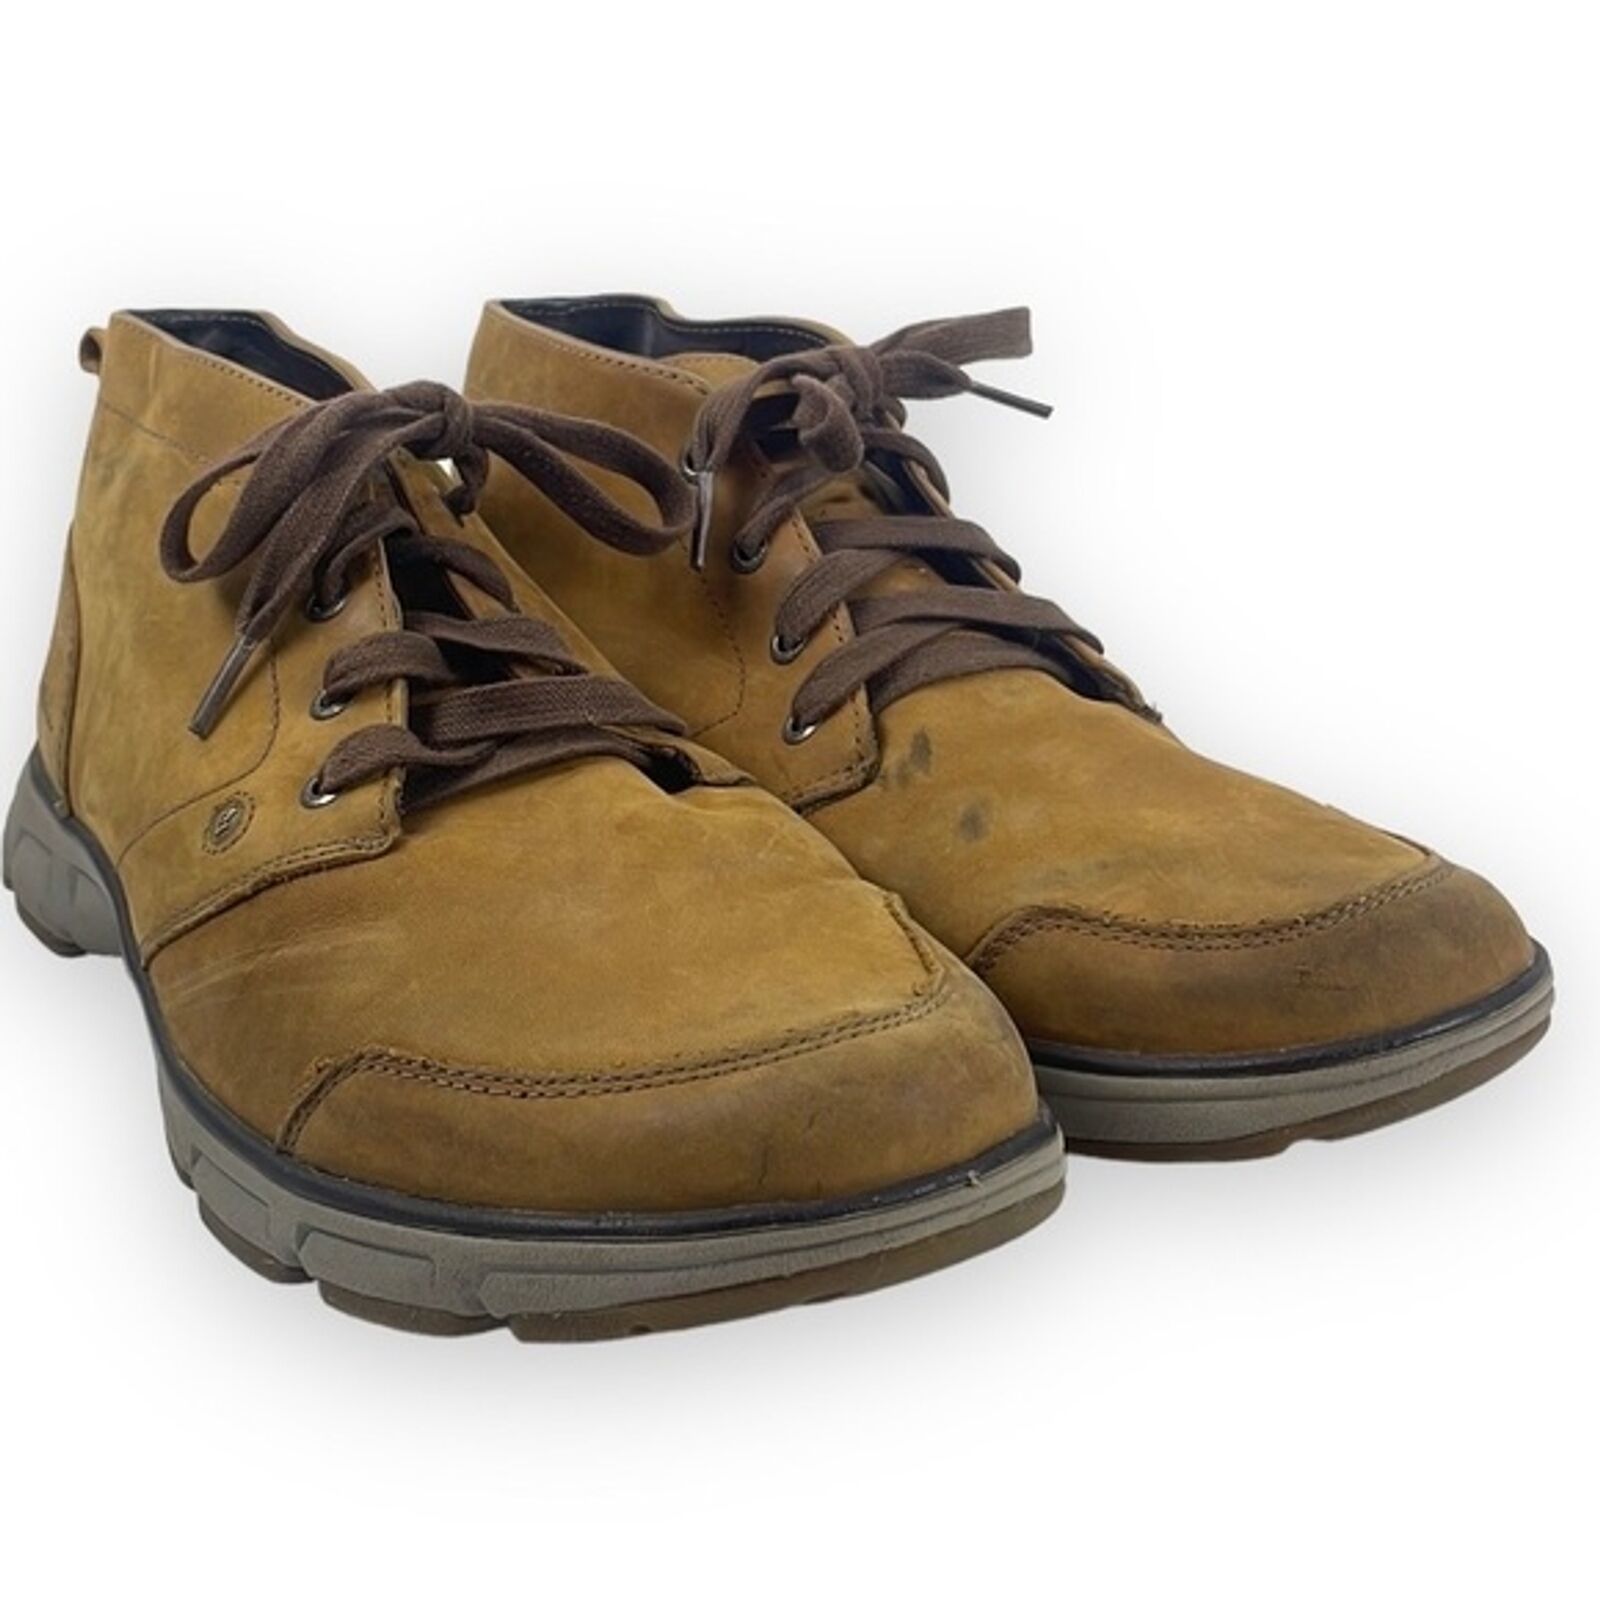 Eddie Bauer Brown Suede Lace Up Half Boots Vibram Soles Sz 12 Men's Chukka Boots - $43.76